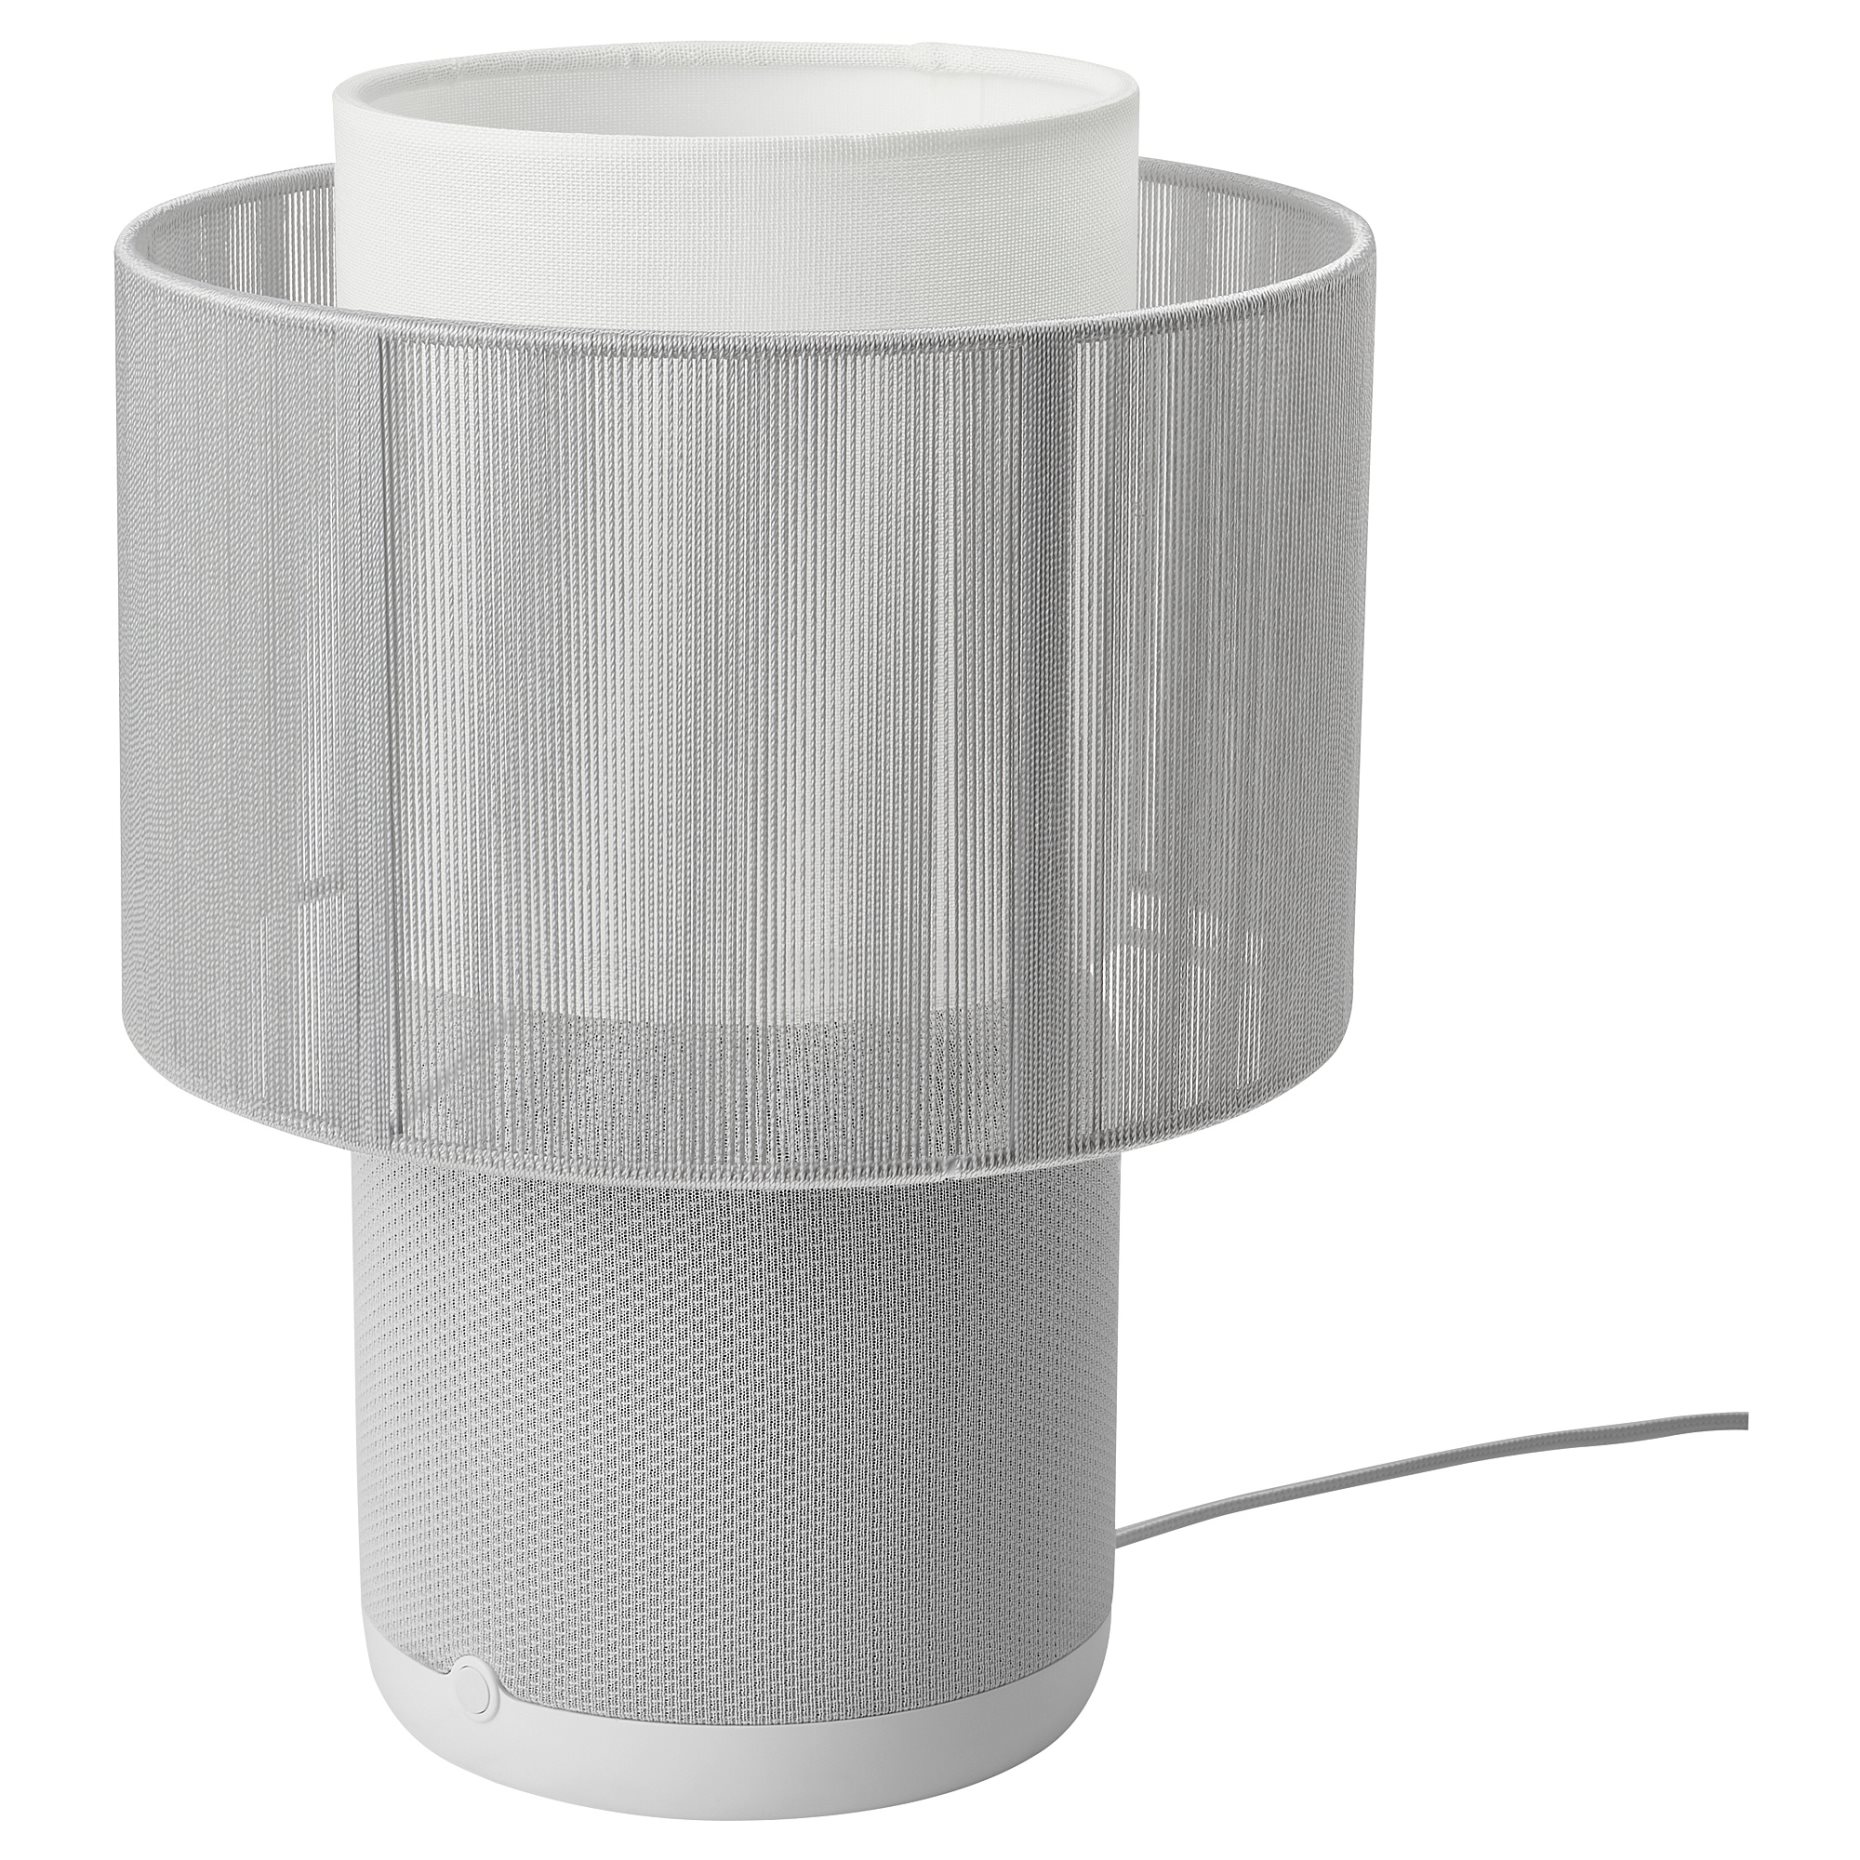 SYMFONISK, speaker lamp base with WiFi, 704.857.63